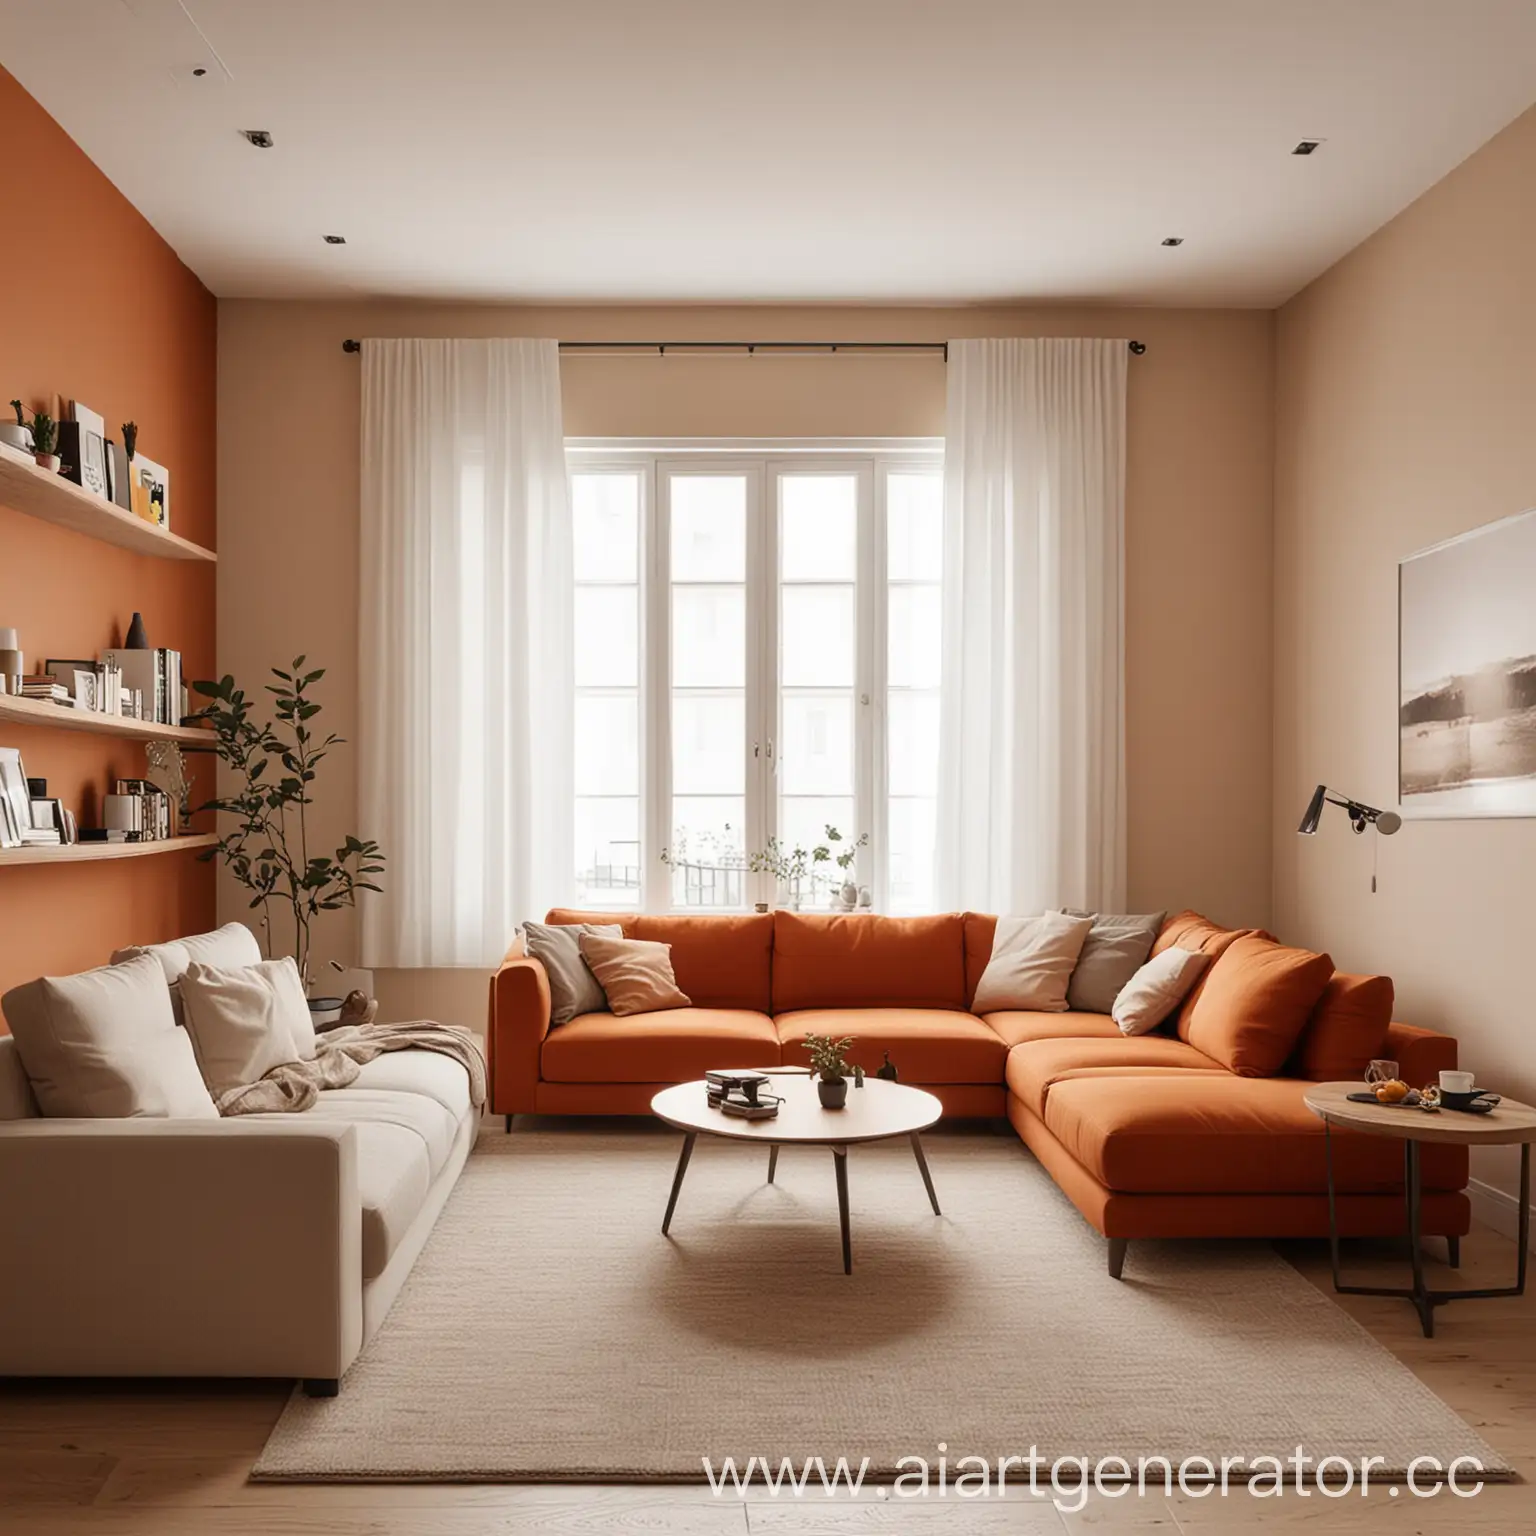 Minimalist-Style-Room-with-Warm-Tones-Furniture